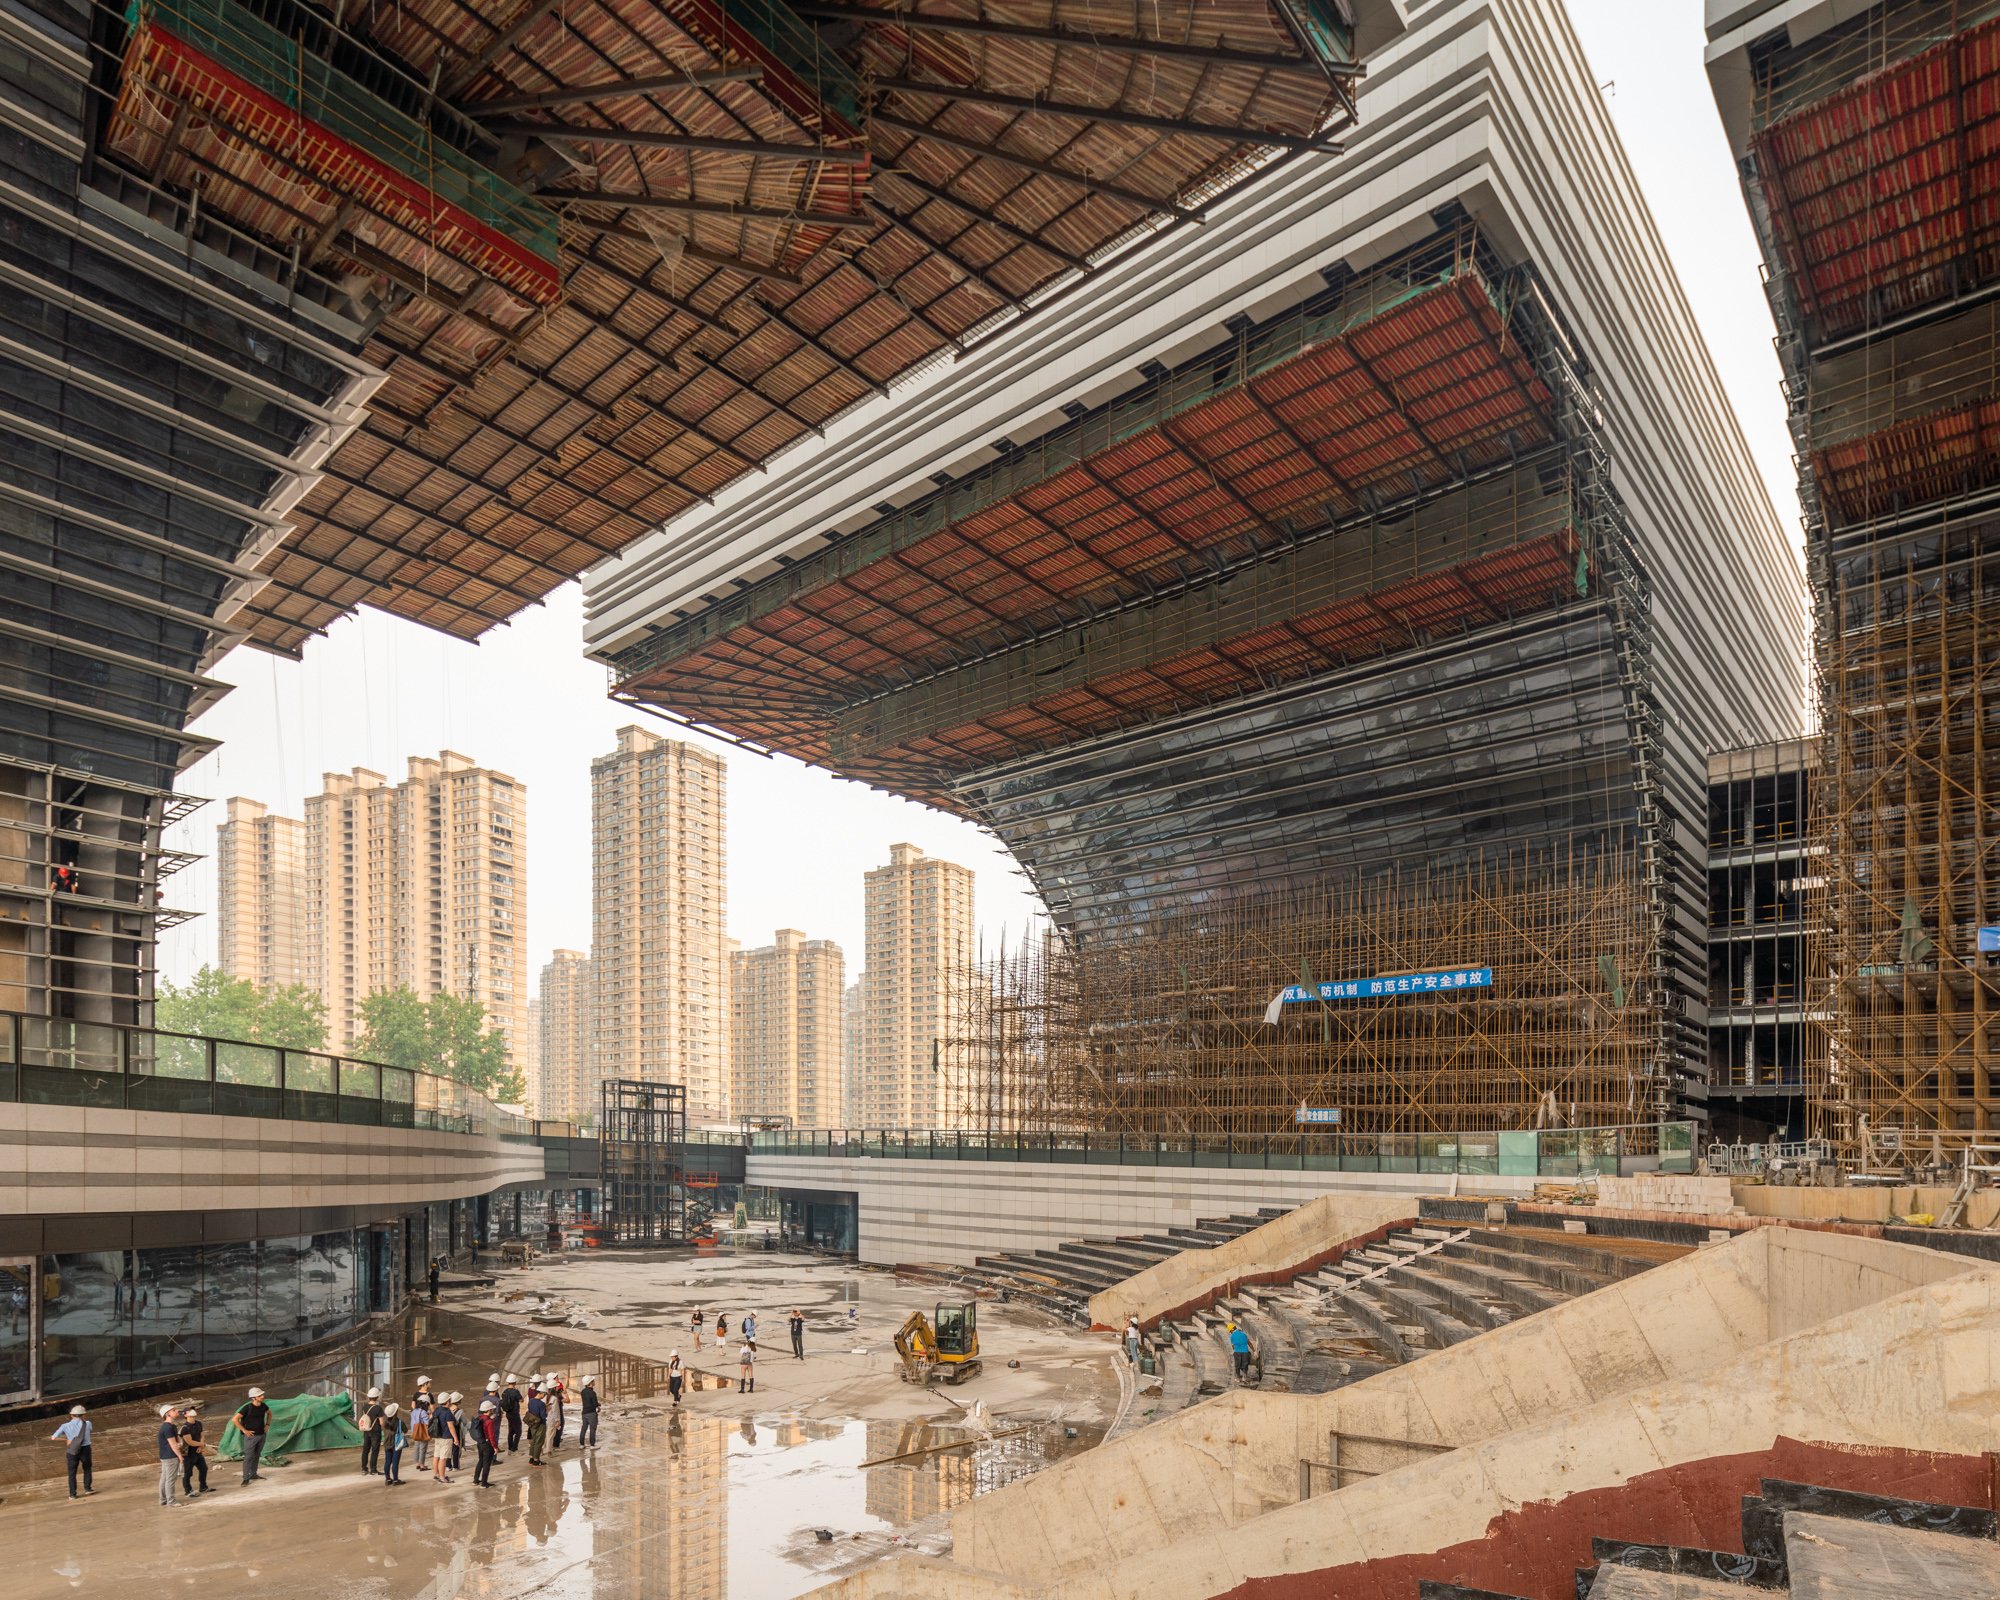  Changzhou Culture Plaza Under Construction Design by gmp architects  Changzhou 